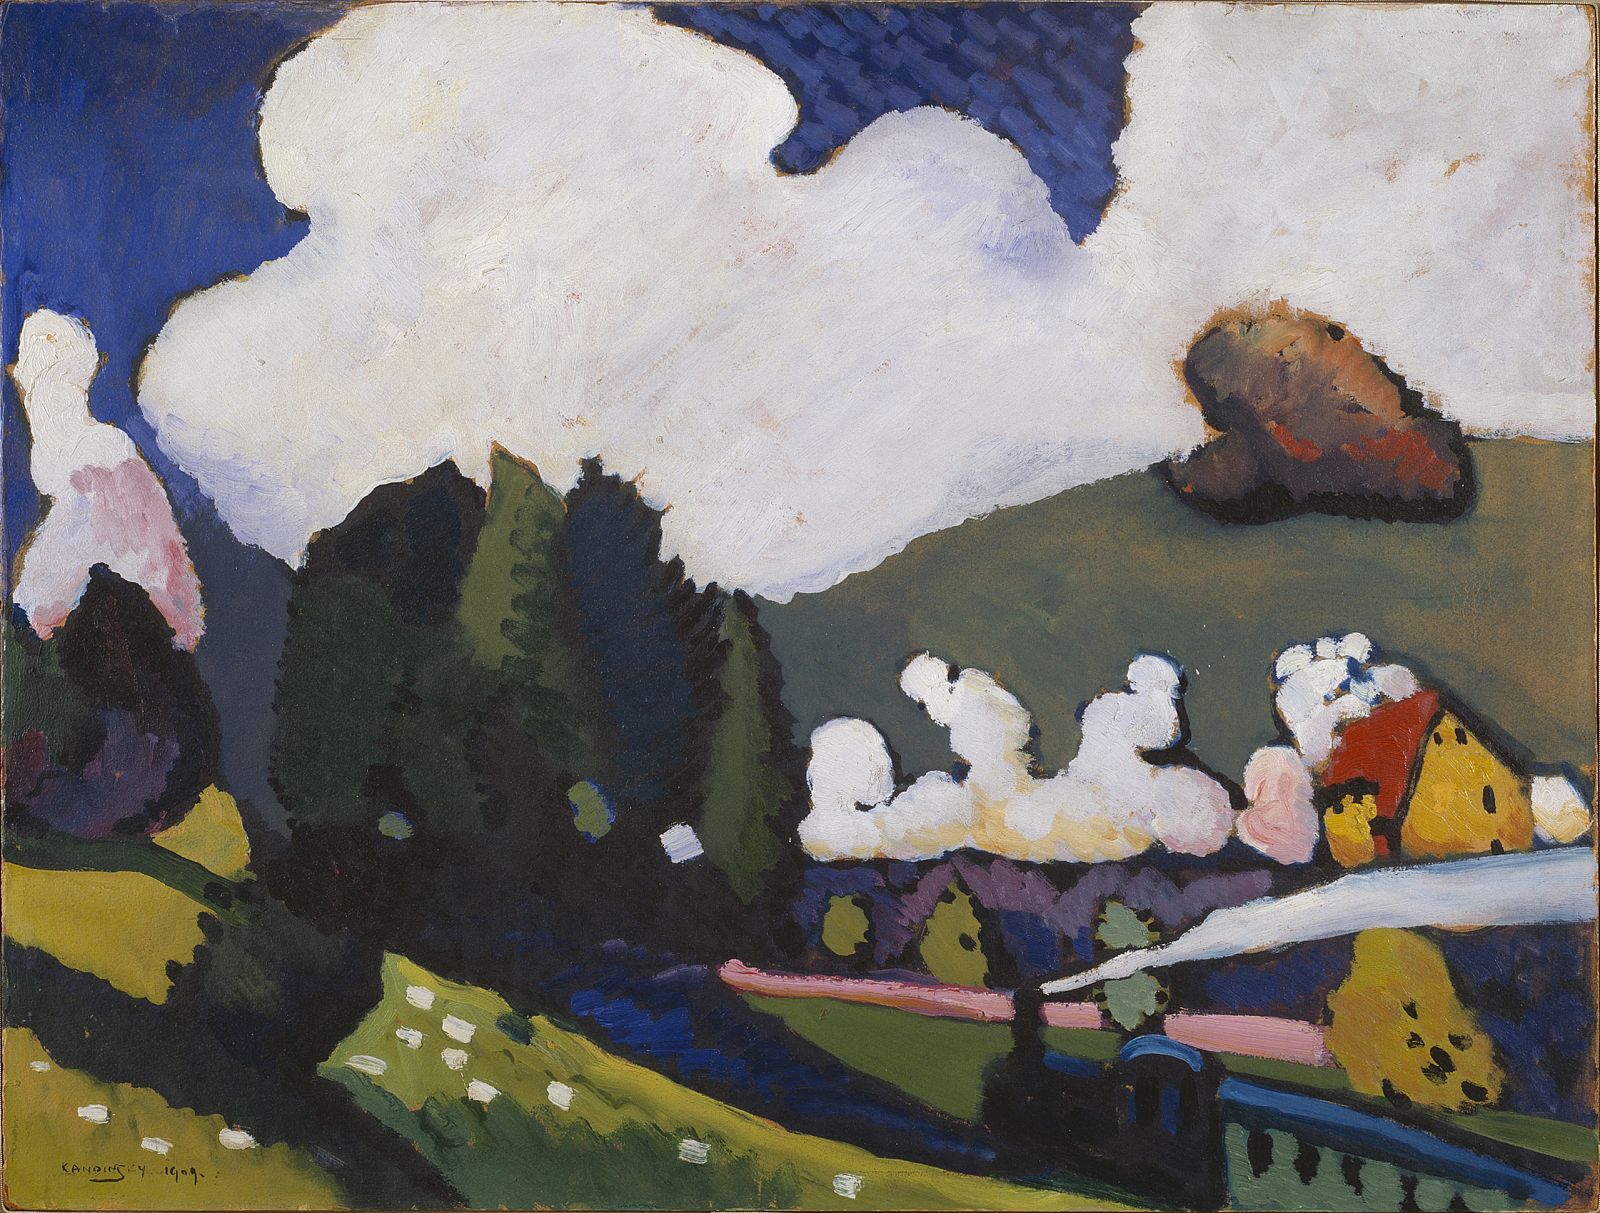 Vasily Kandinsky Landscape near Murnau with Locomotive (1909)